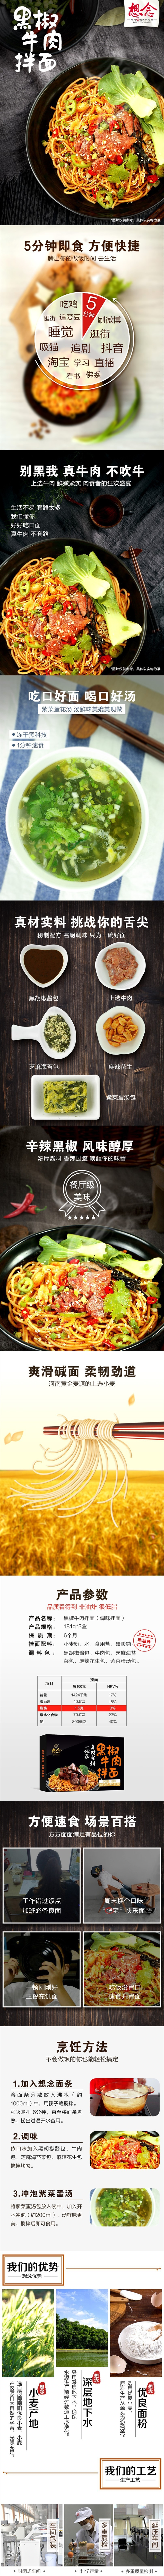 Black pepper  noodles 181gX3